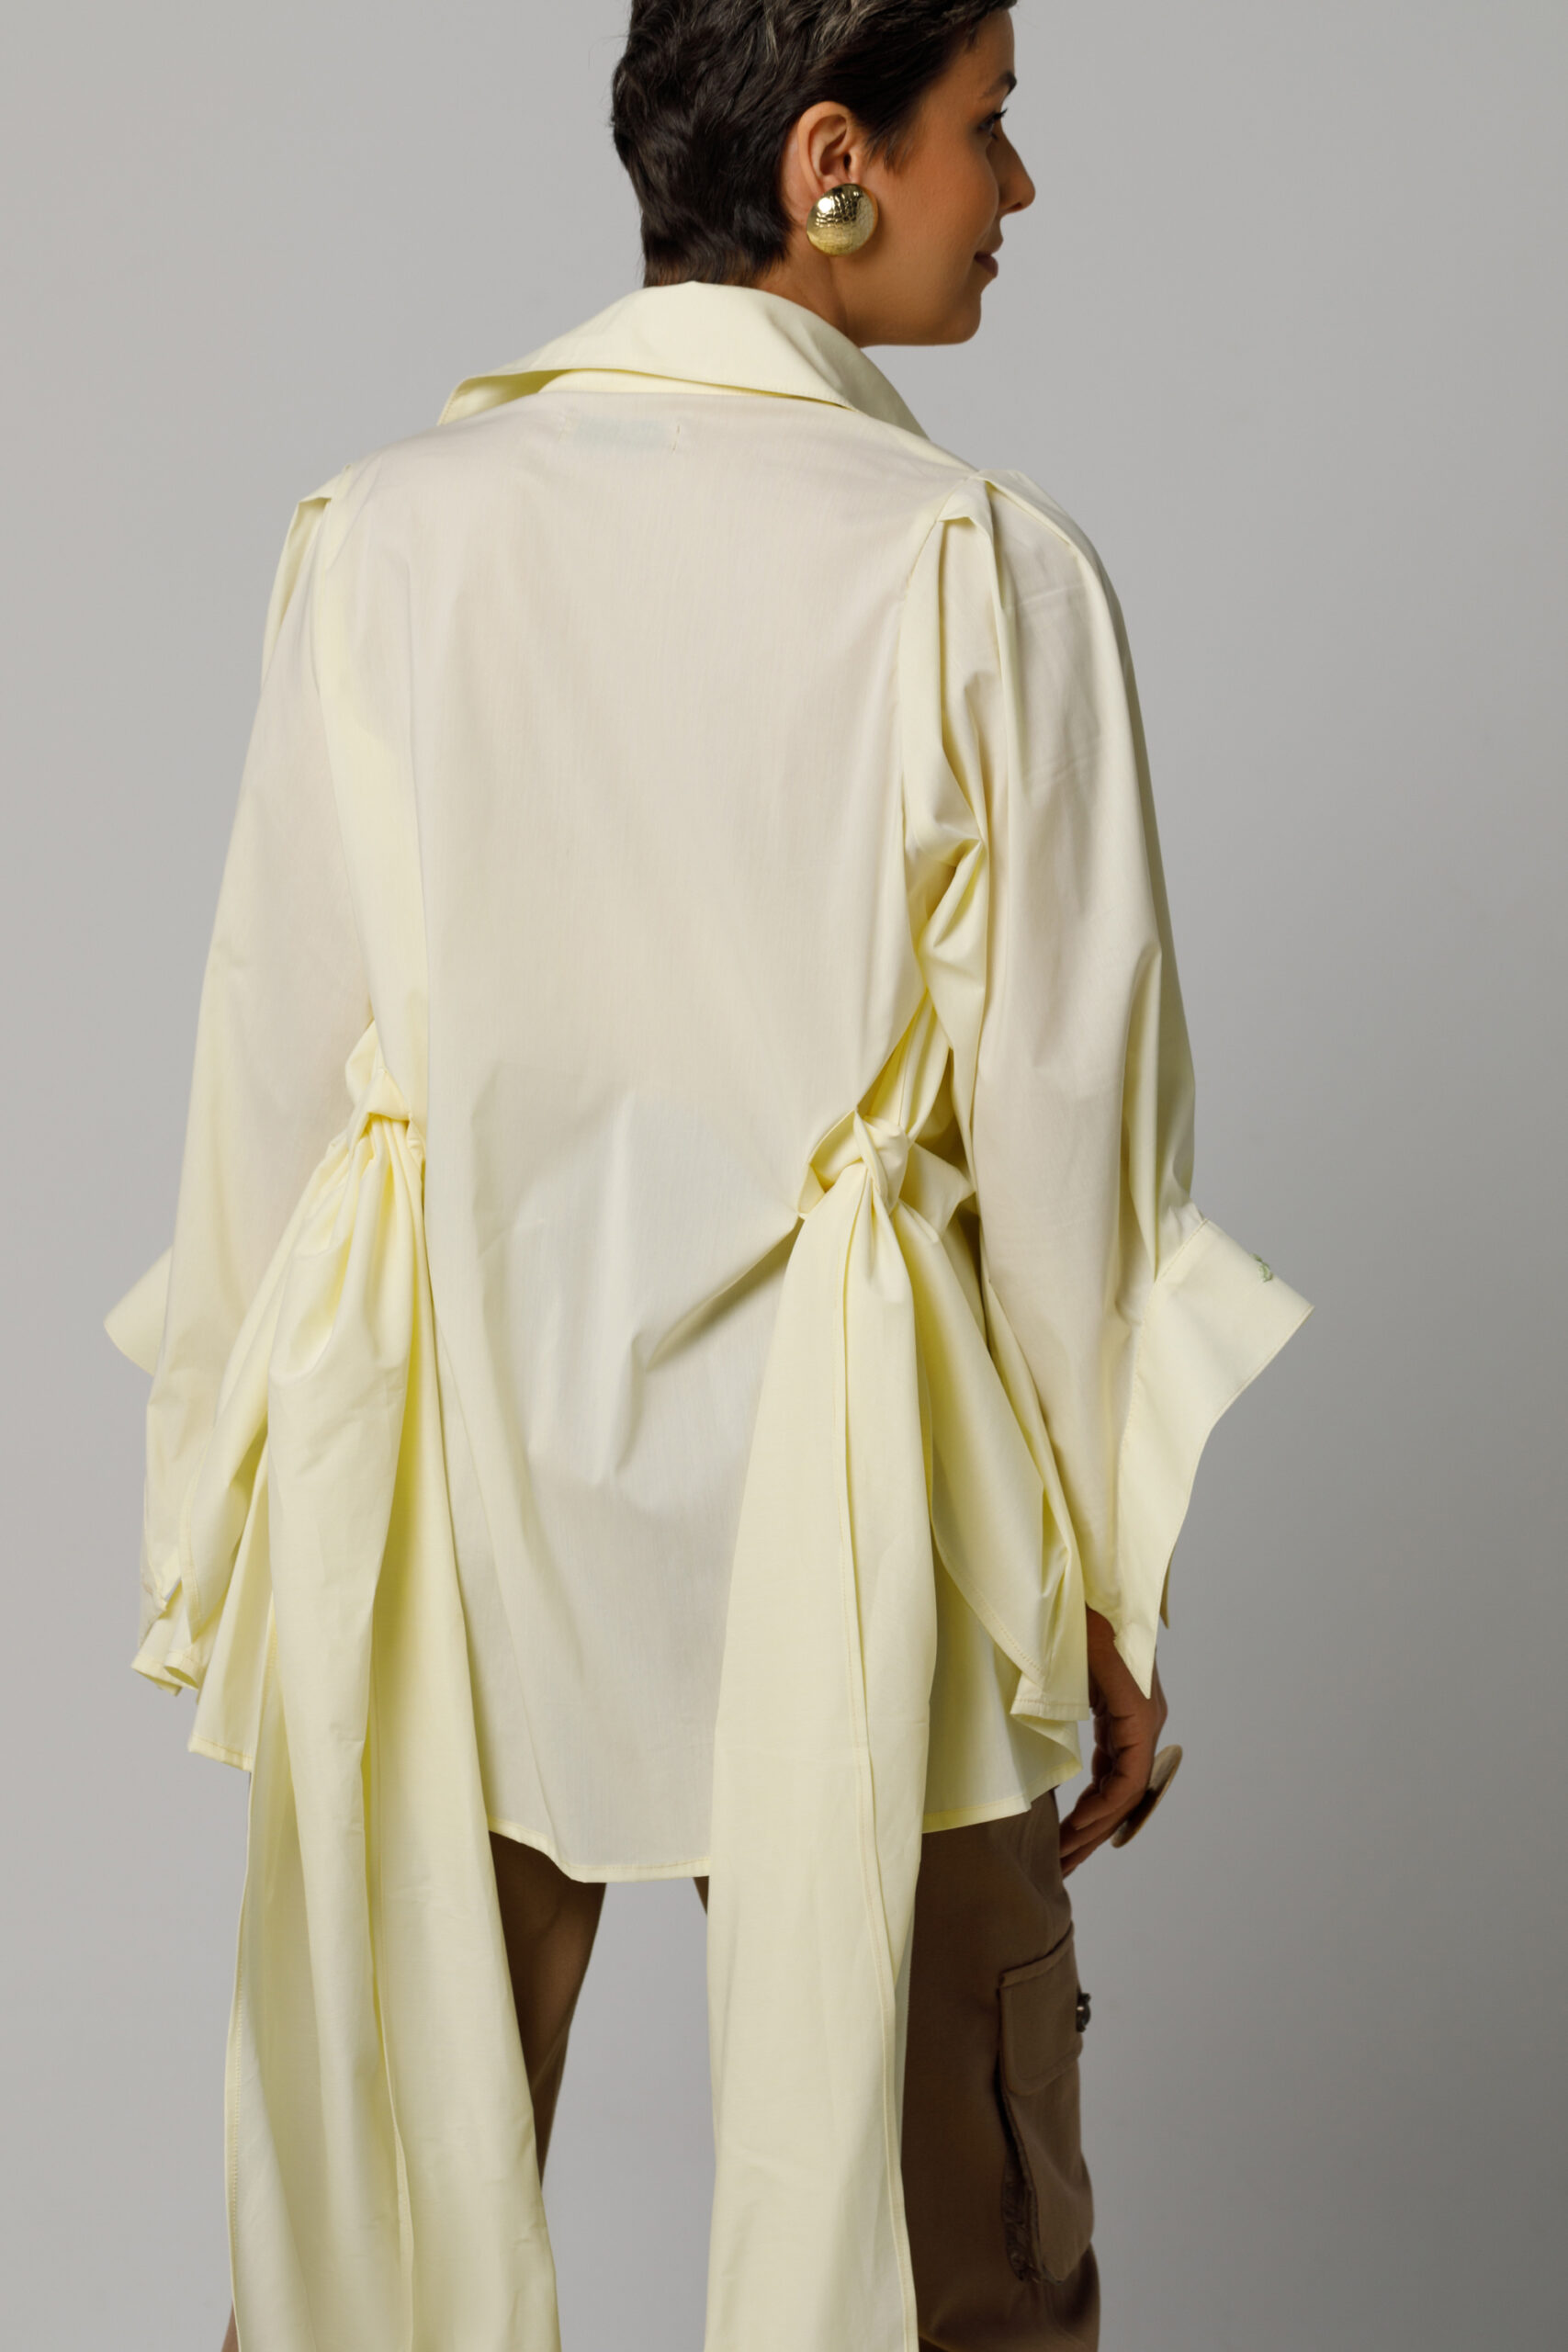 BIANCO Yellow shirt with oversize cord. Natural fabrics, original design, handmade embroidery